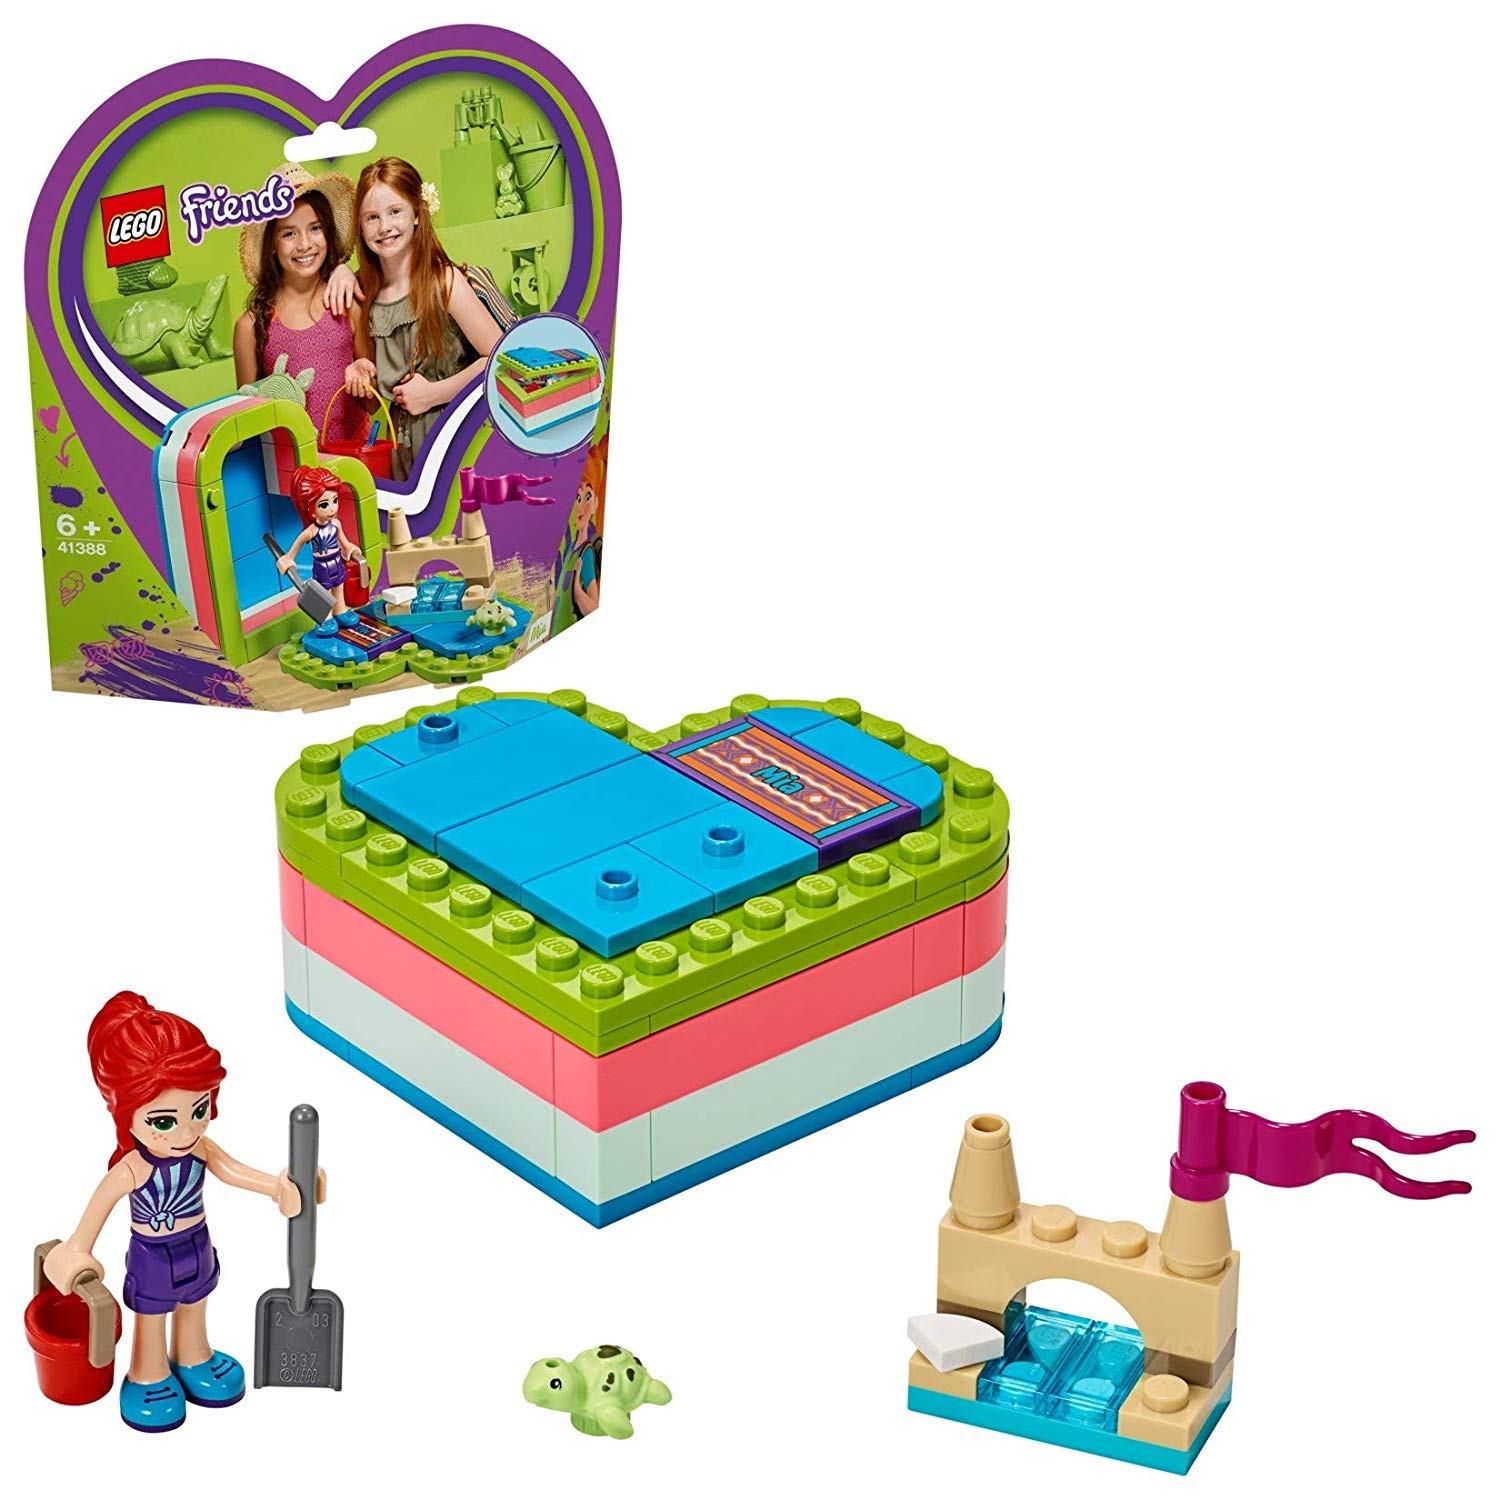 Lego Friends Mias 41388 Summer Heart Box, Construction Kit